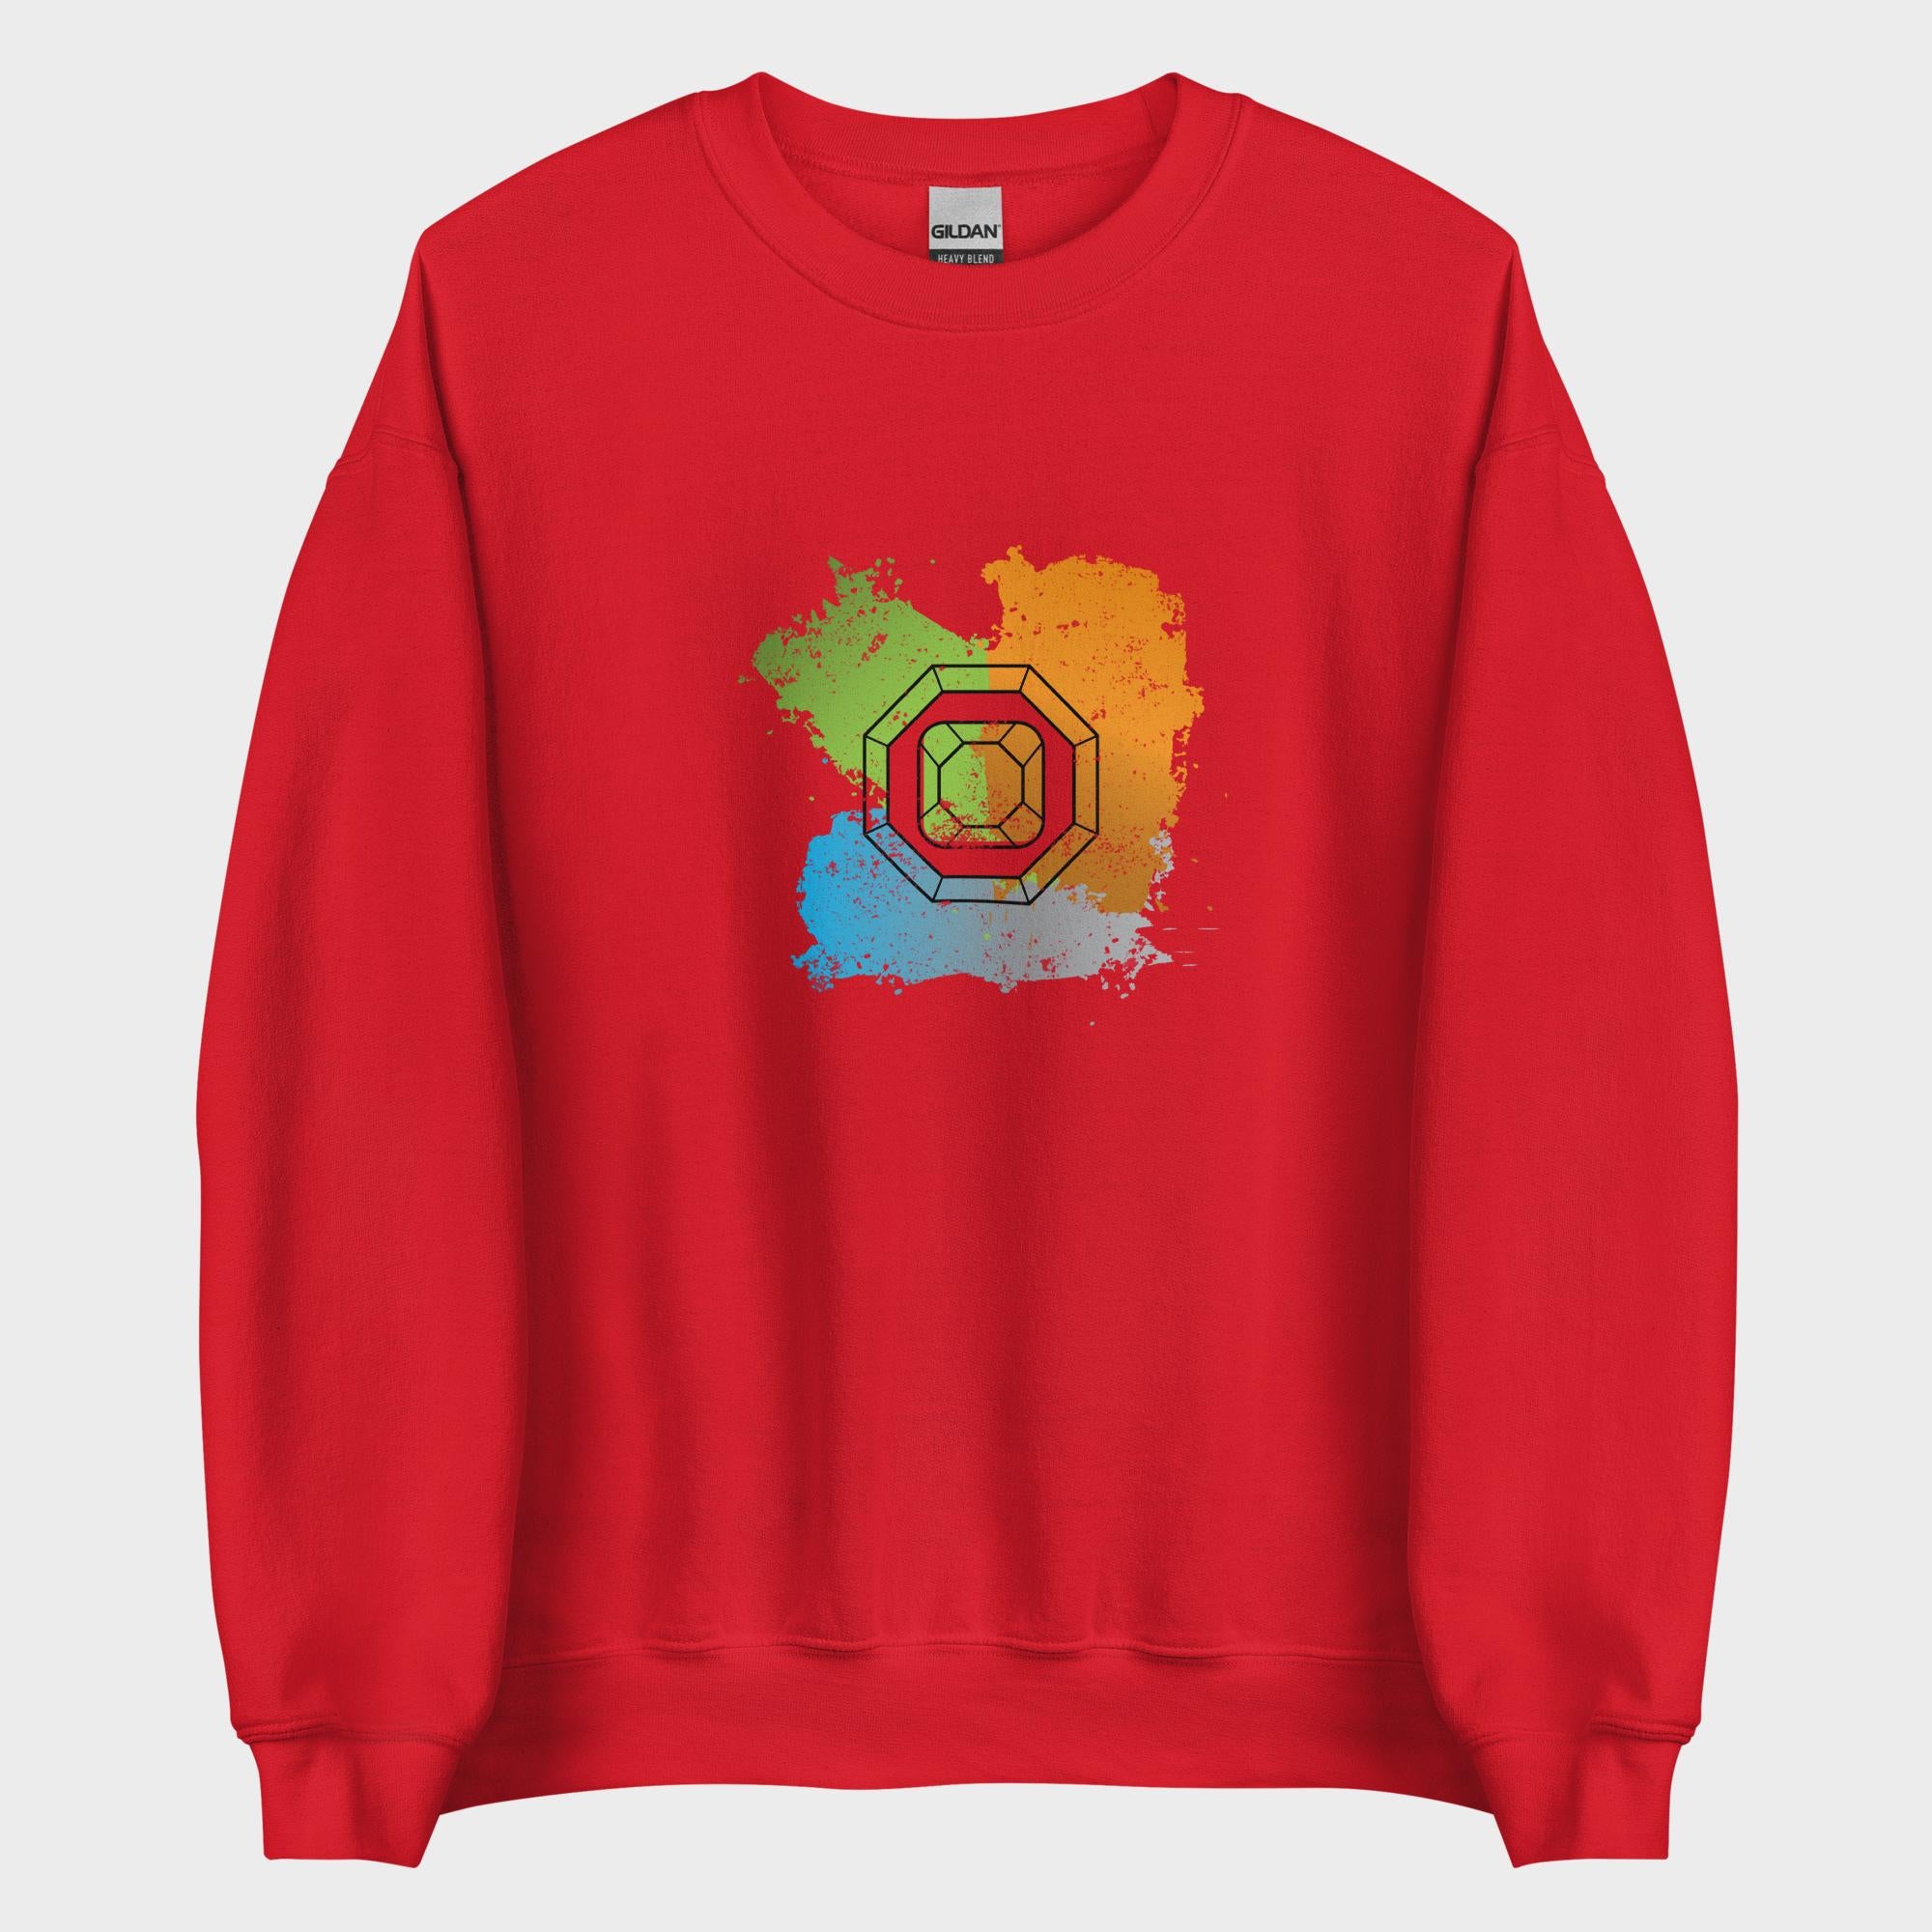 The Elements - Sweatshirt